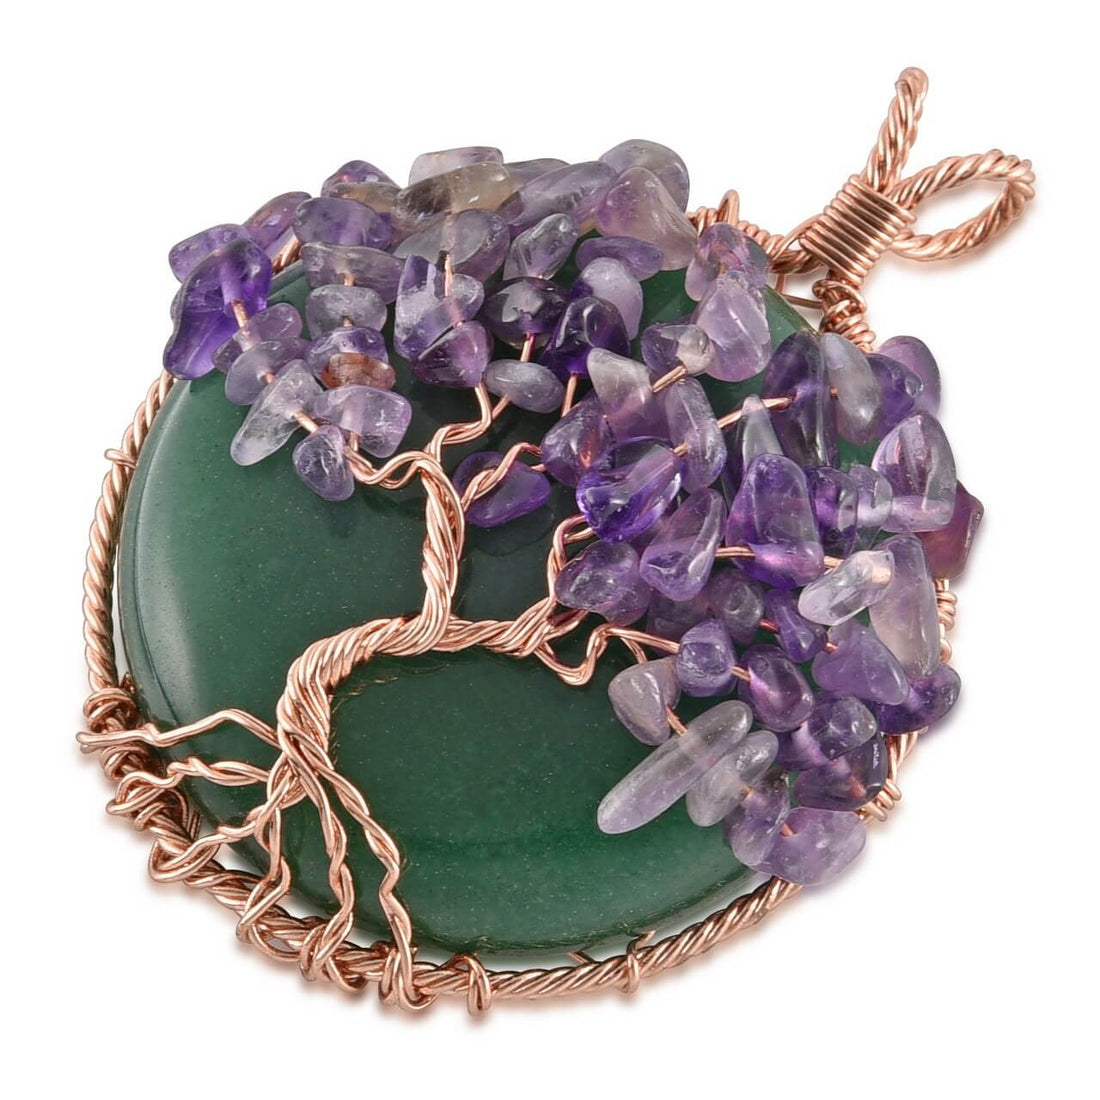 jovivi healing reiki gemstone necklace chakras crystals pendant 